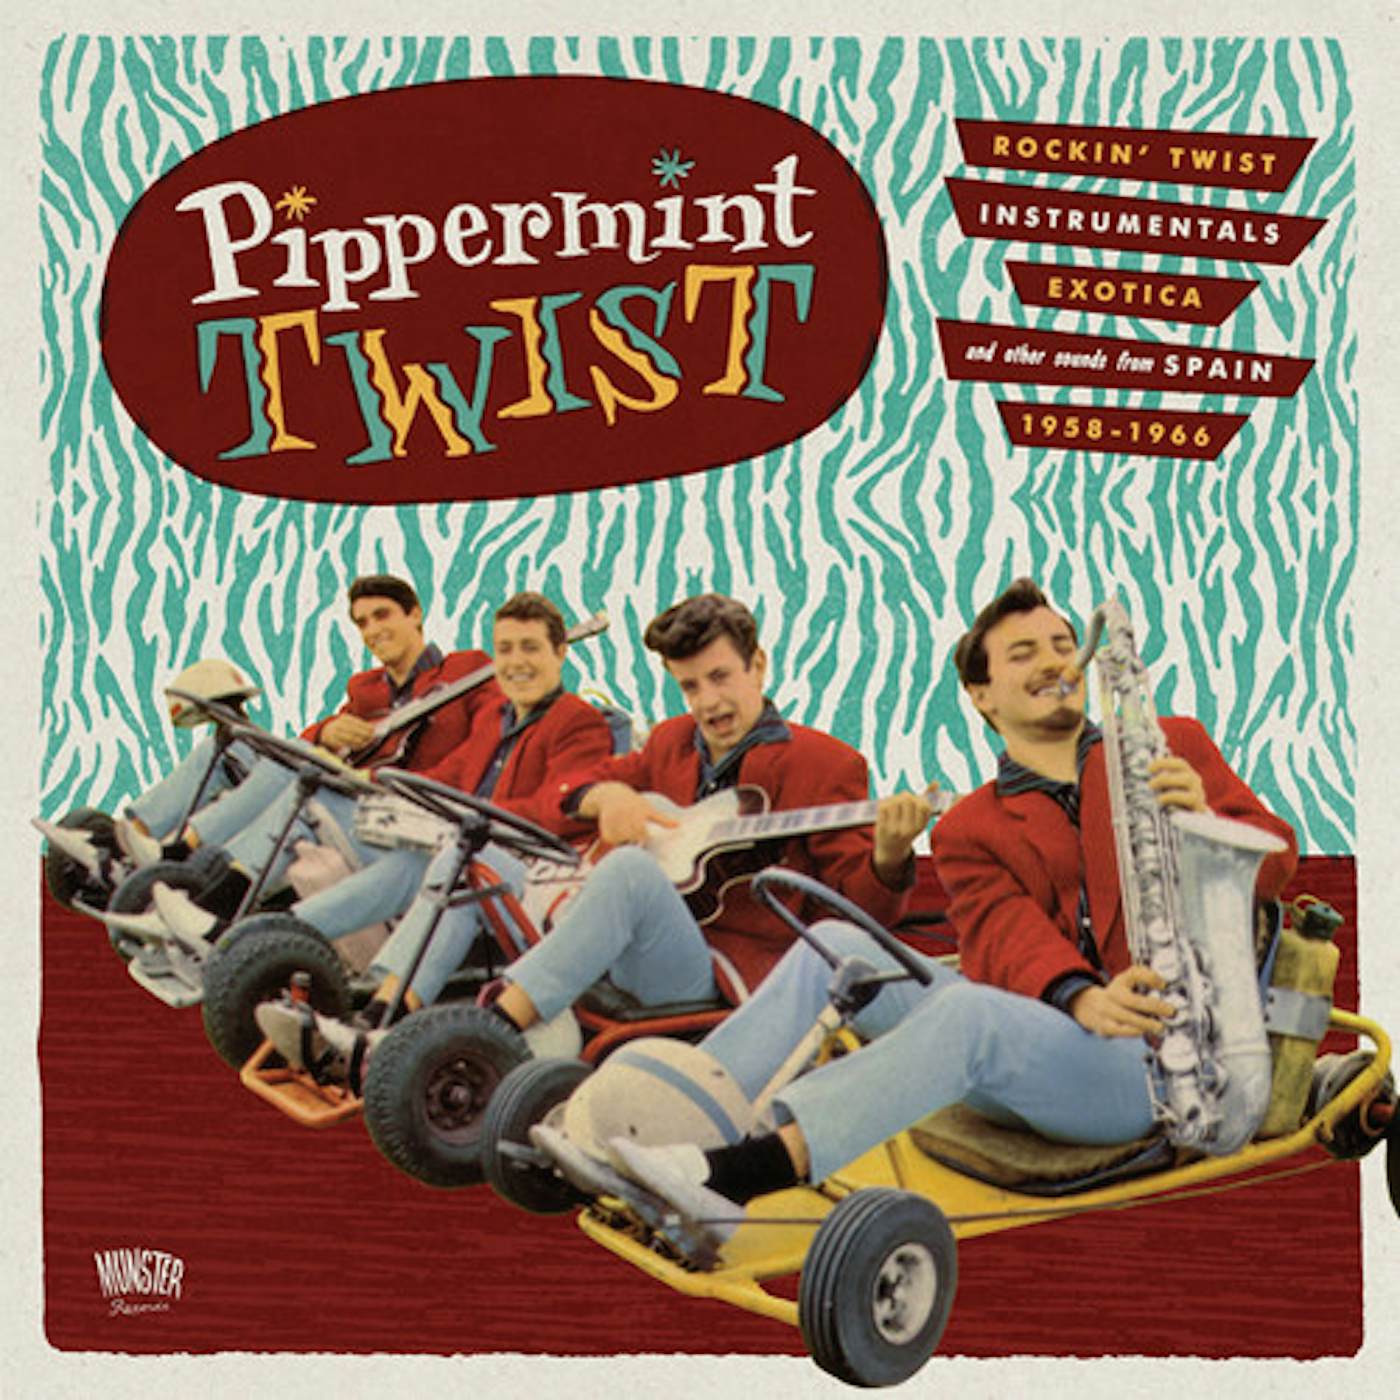 PIPPERMENT TWIST: ROCKIN TWIST INSTRUMENTALS / VAR Vinyl Record